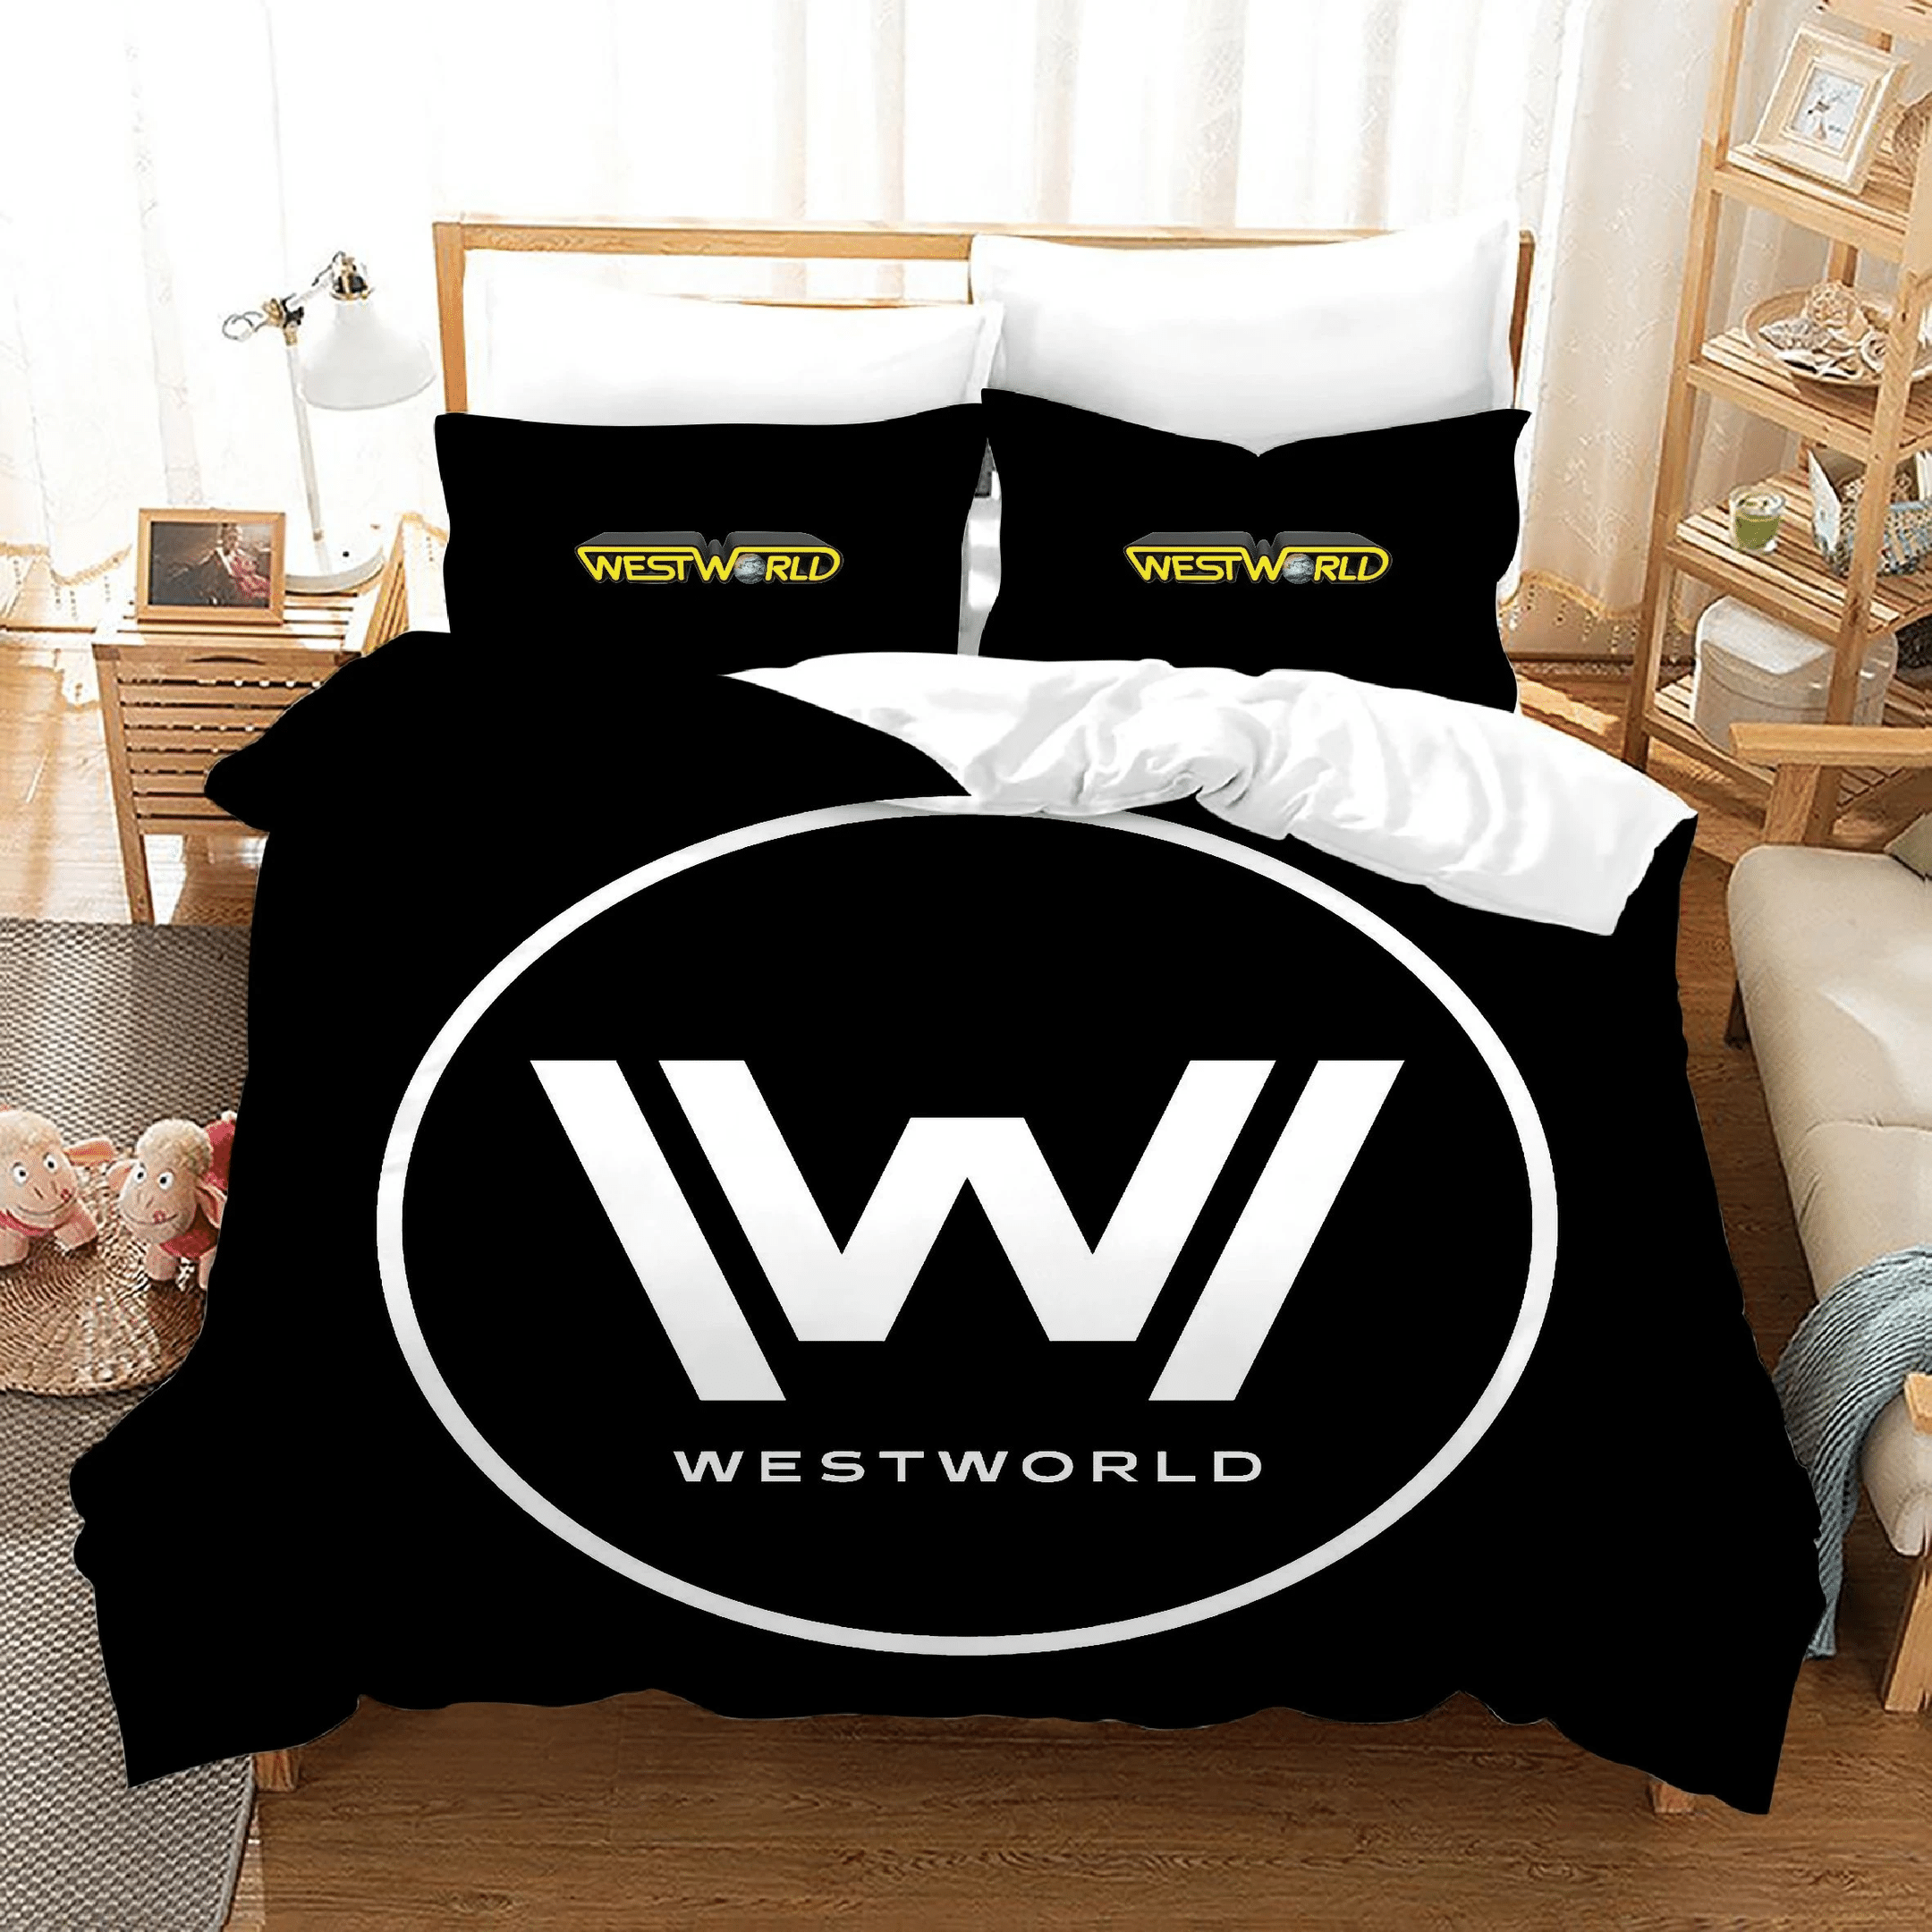 Westworld 3 Duvet Cover Quilt Cover Pillowcase Bedding Sets Bed